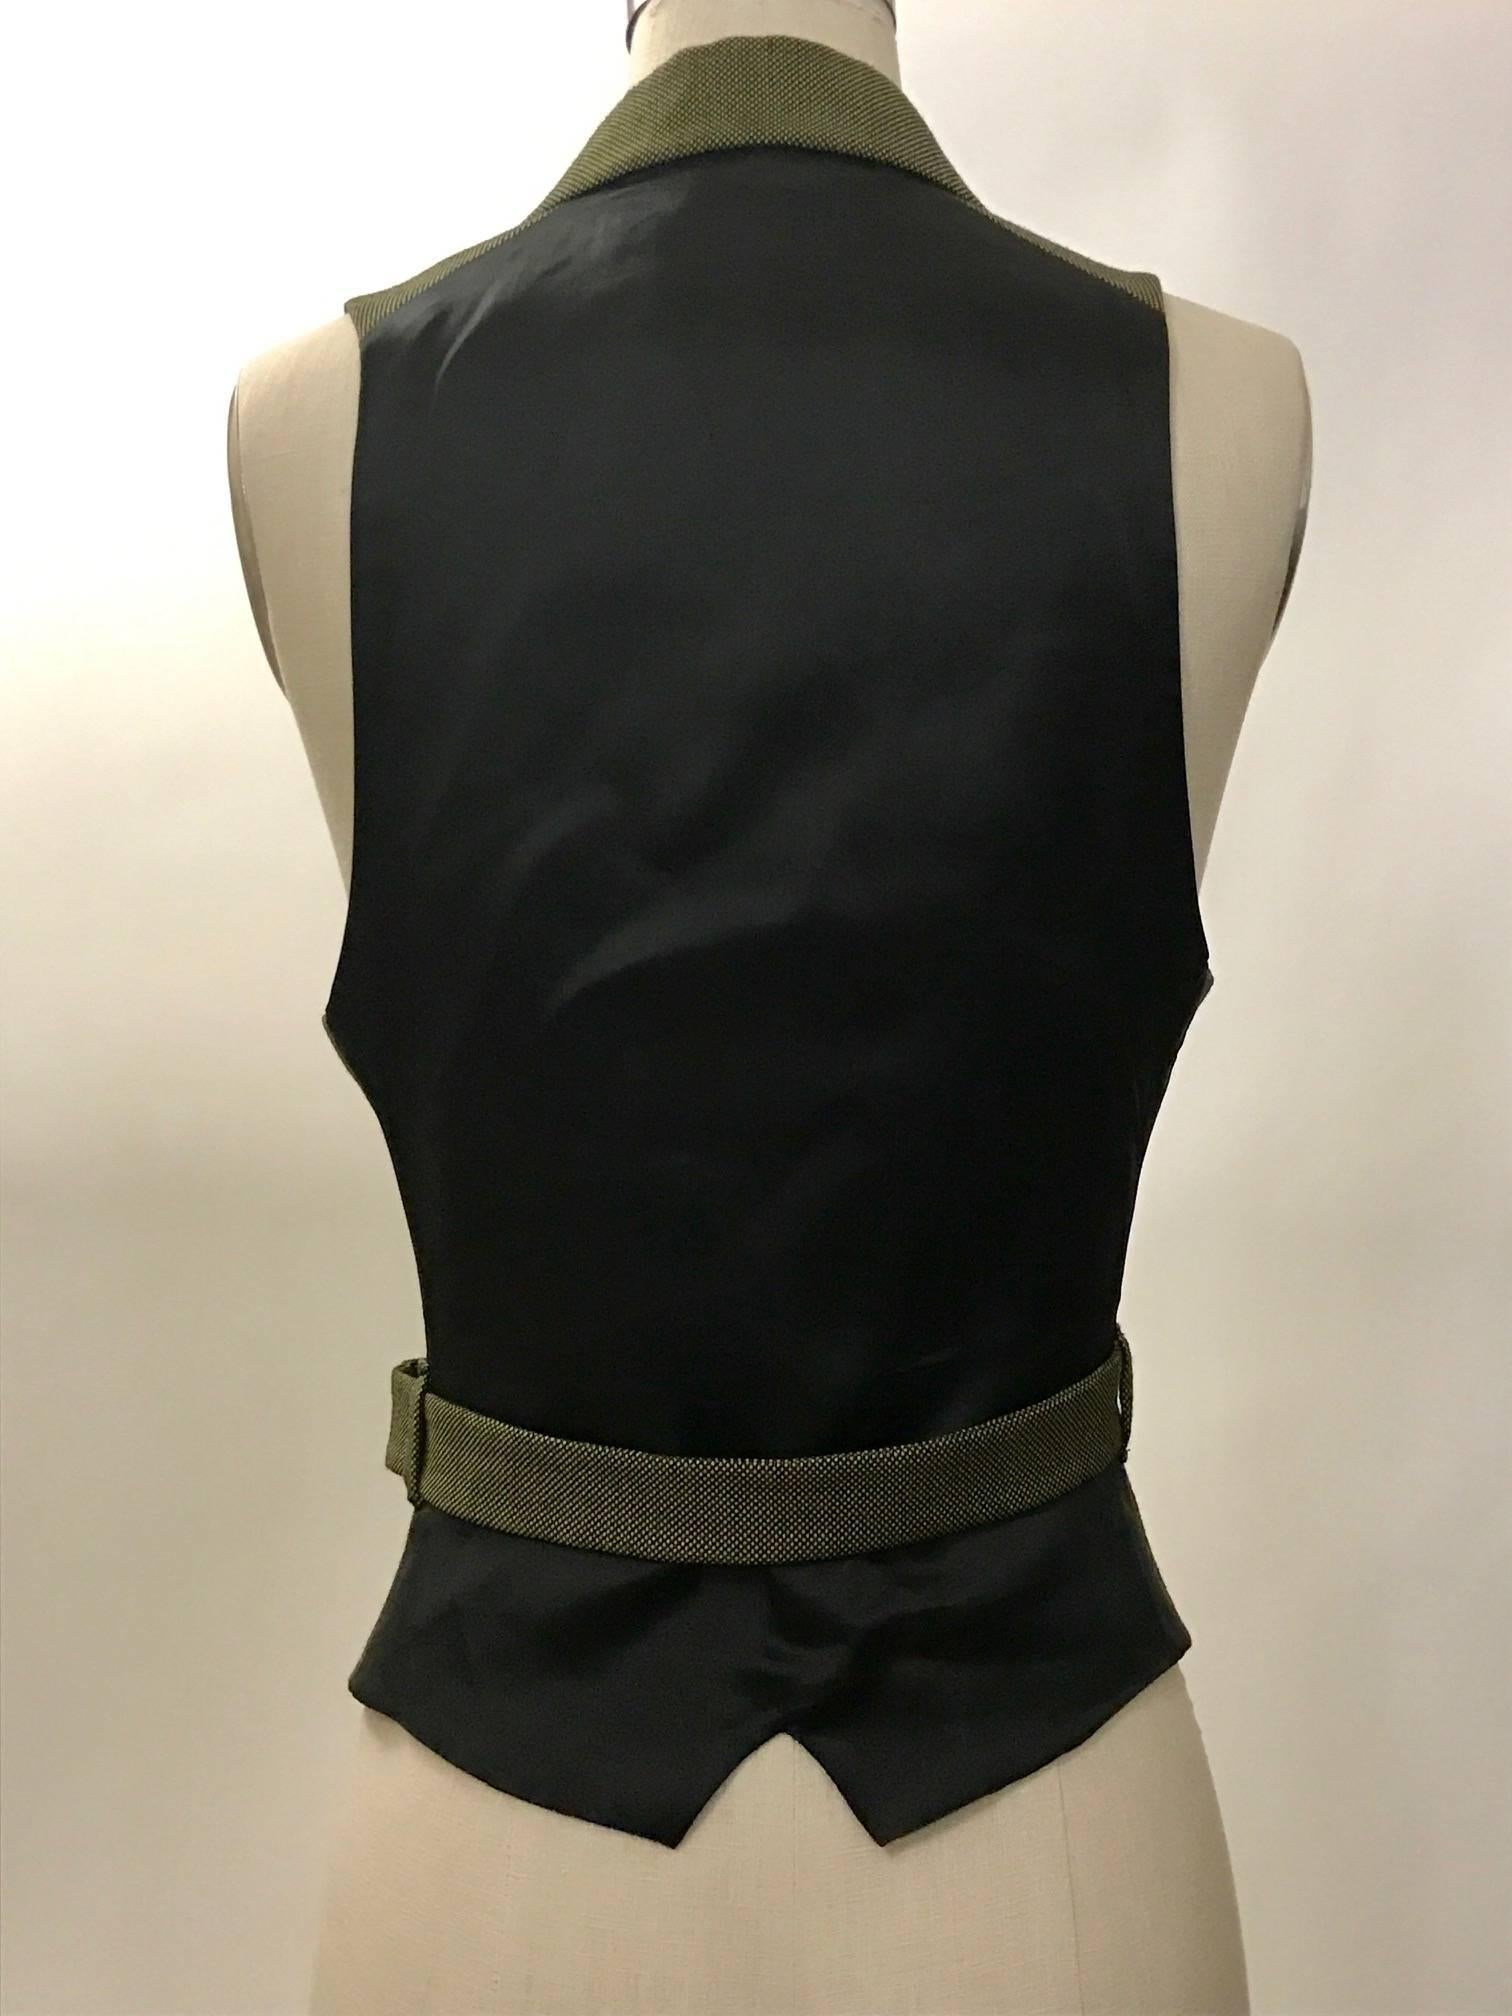 Alexander McQueen 2001 Runway Green and Black Belted Waistcoat Vest In Excellent Condition In San Francisco, CA